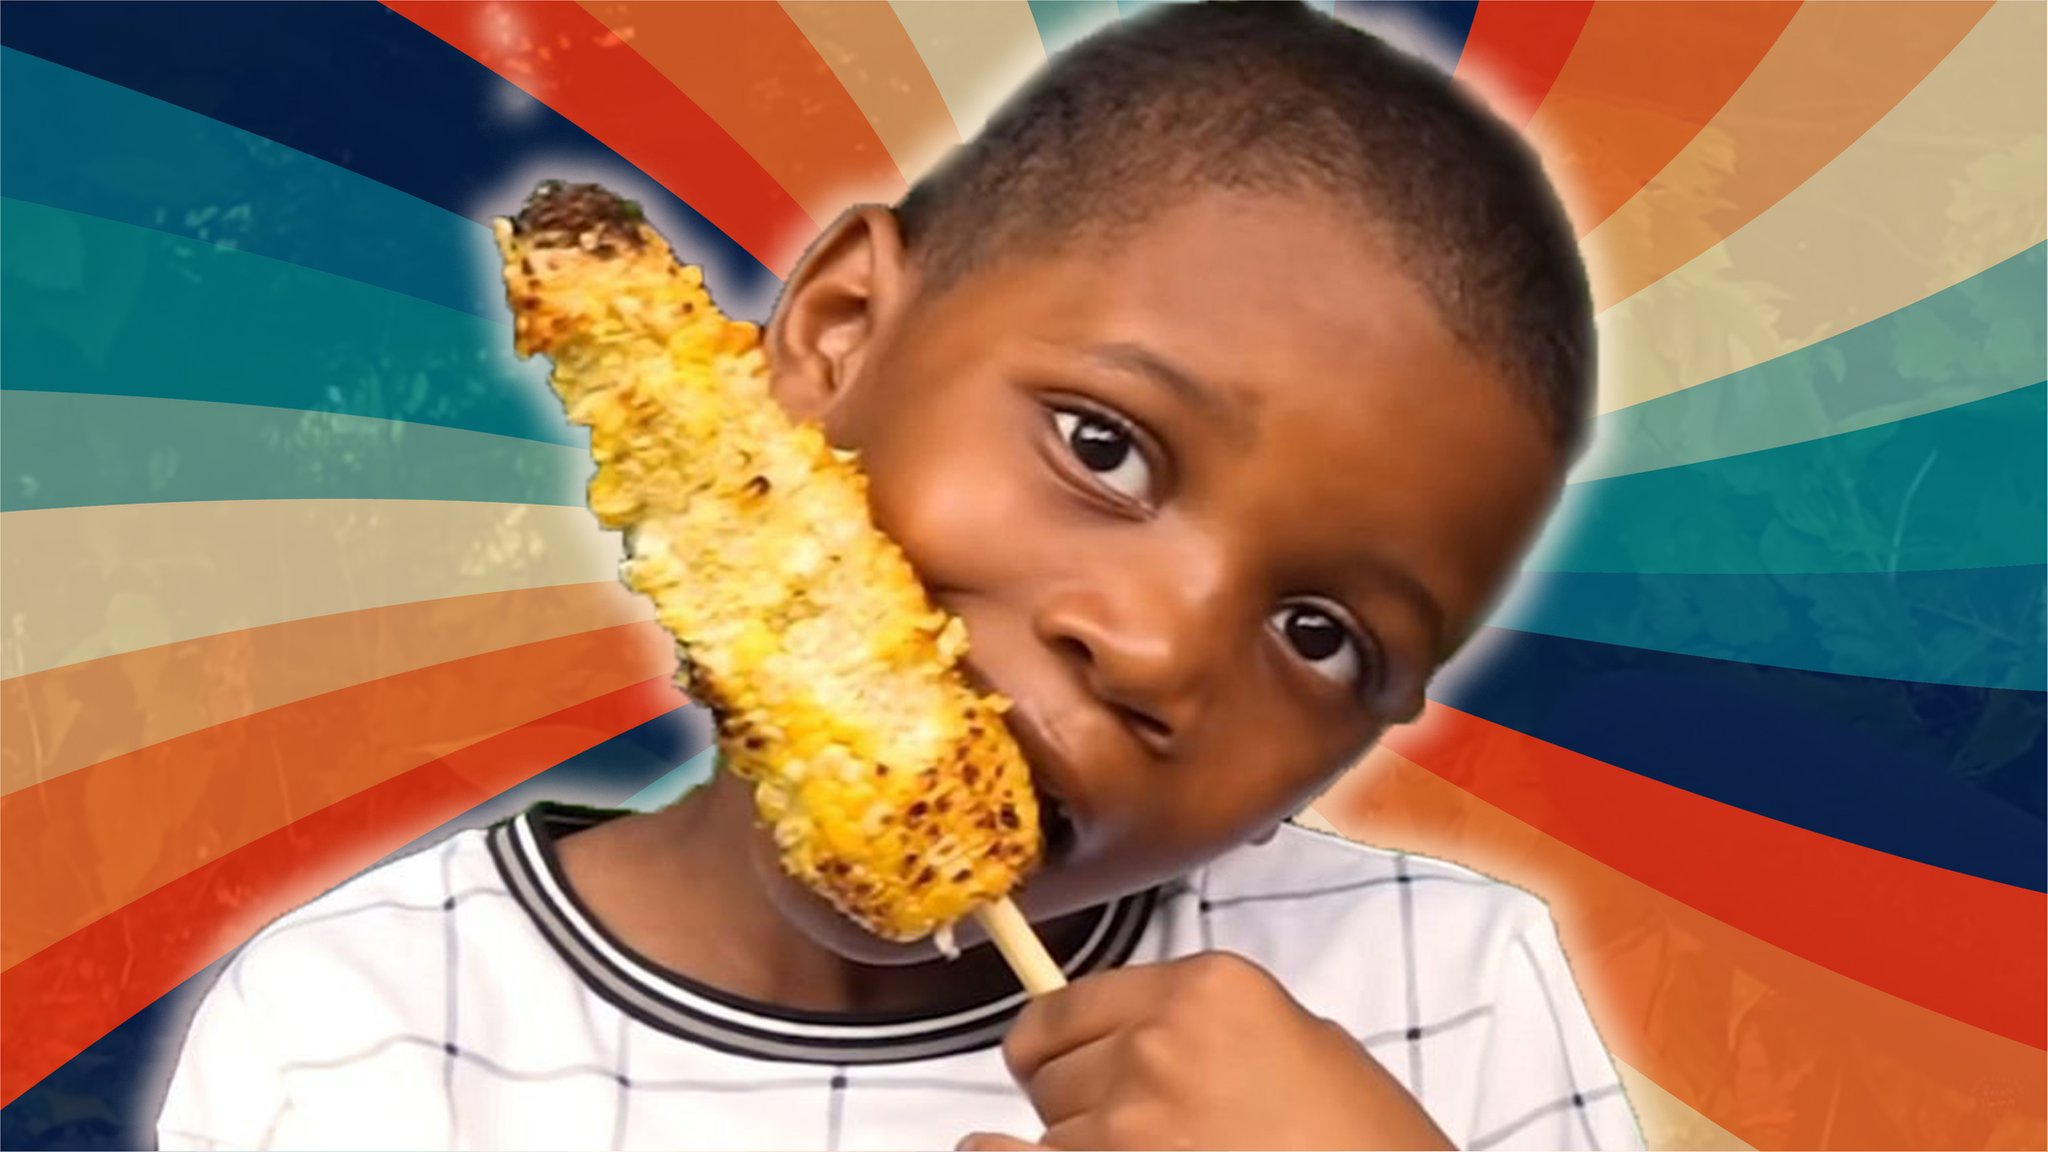 Its Corn. Phild Corn meme. Corn Kids 64. Corn Kids 64 game. Corn песни